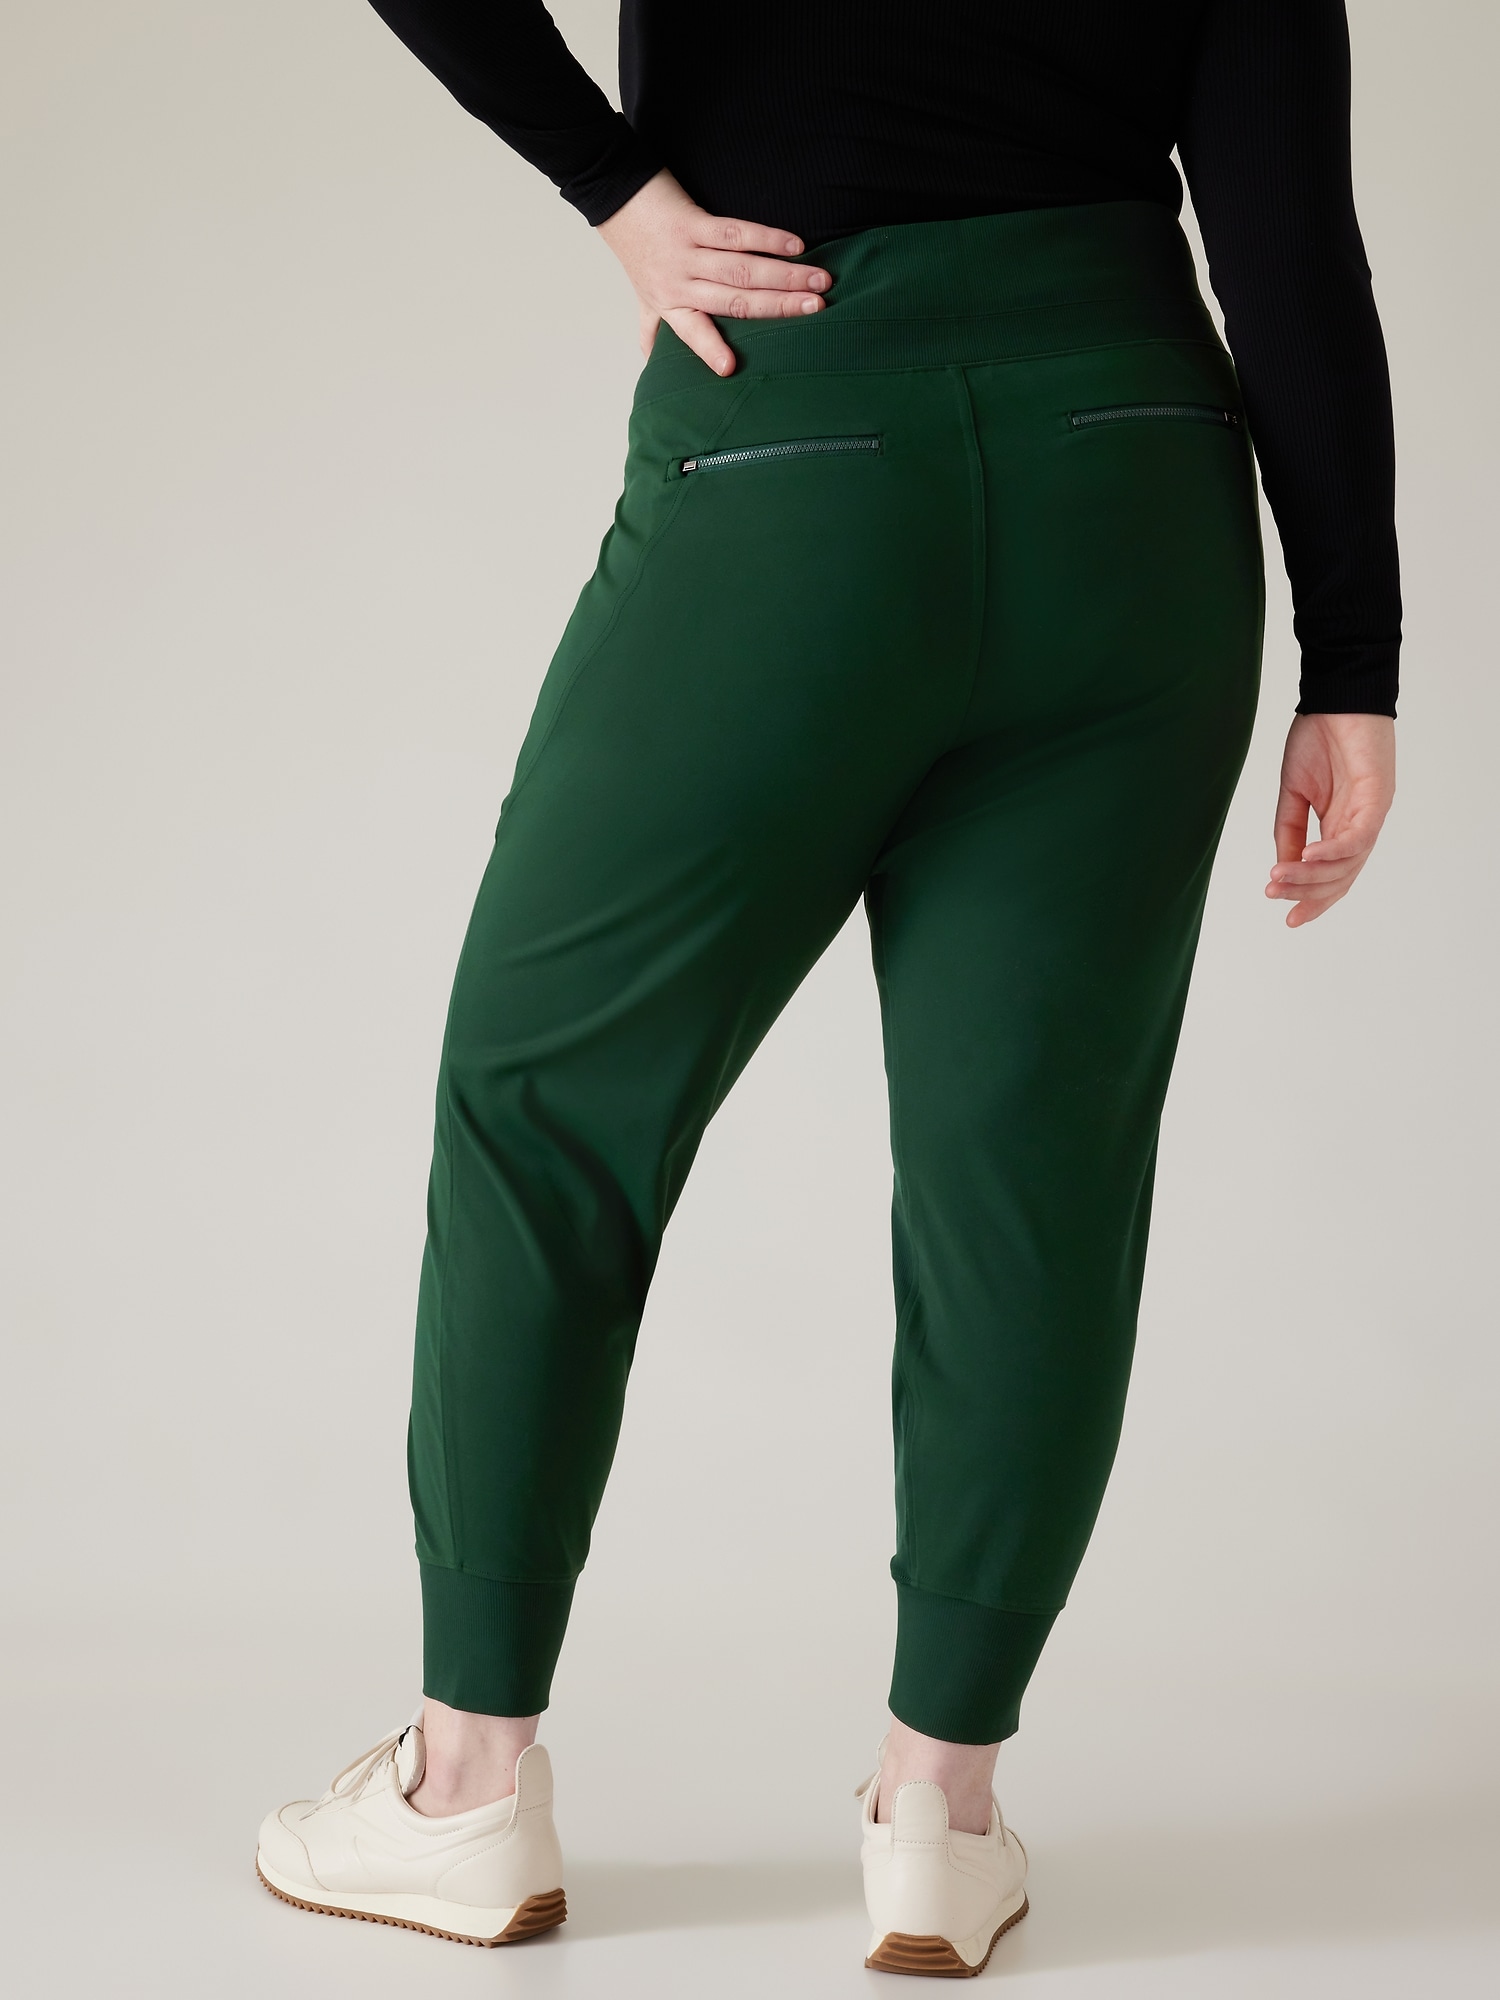 Women's Jogger Pants in Emerald  Women jogger pants, Joggers